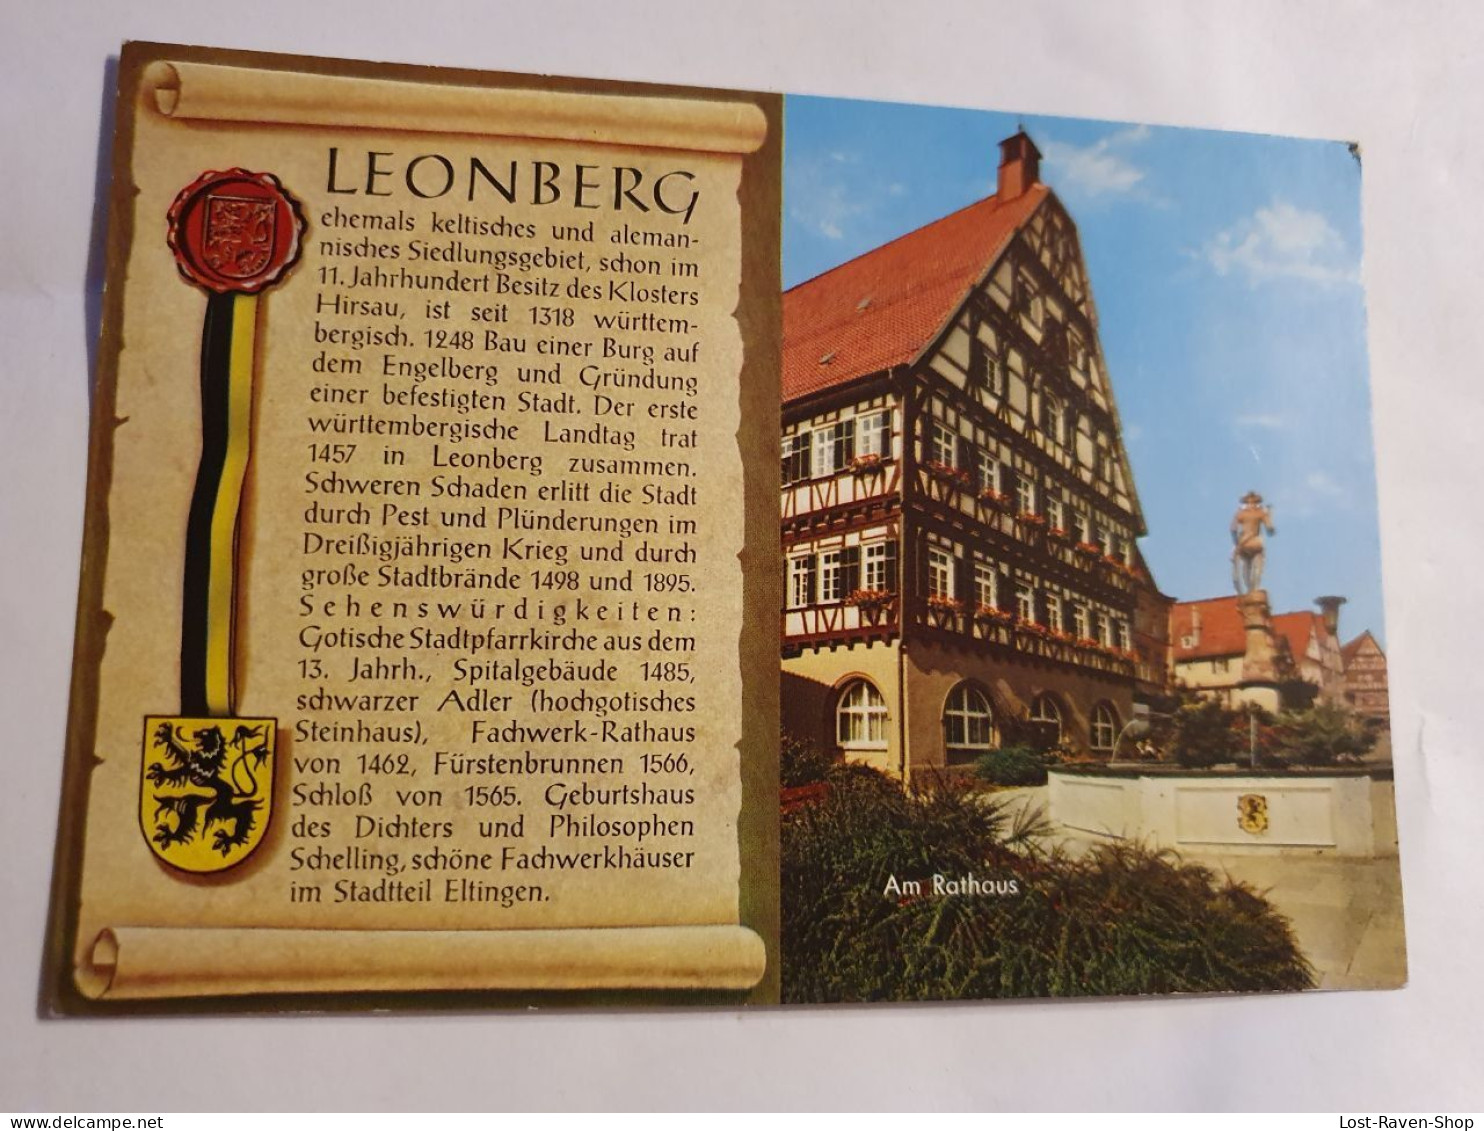 Leonberg - Leonberg